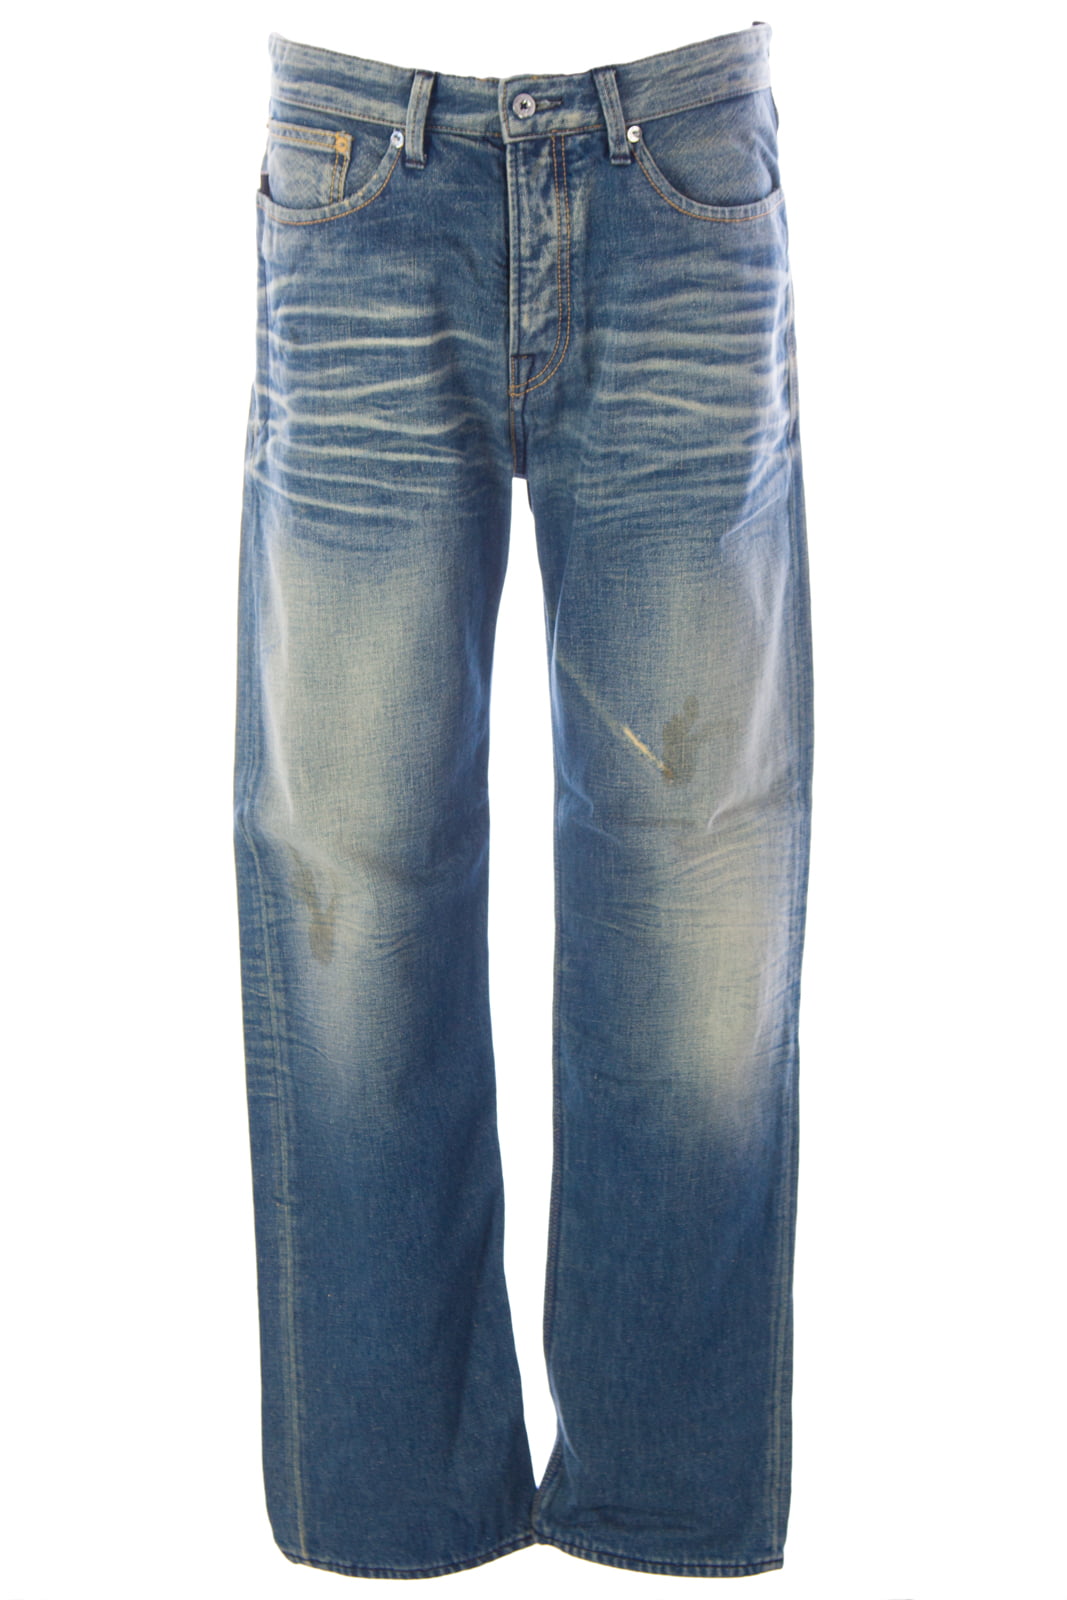 Retail $109 NWT Men's Buffalo David Bitton ASH-X Skinny Stretch Jeans 